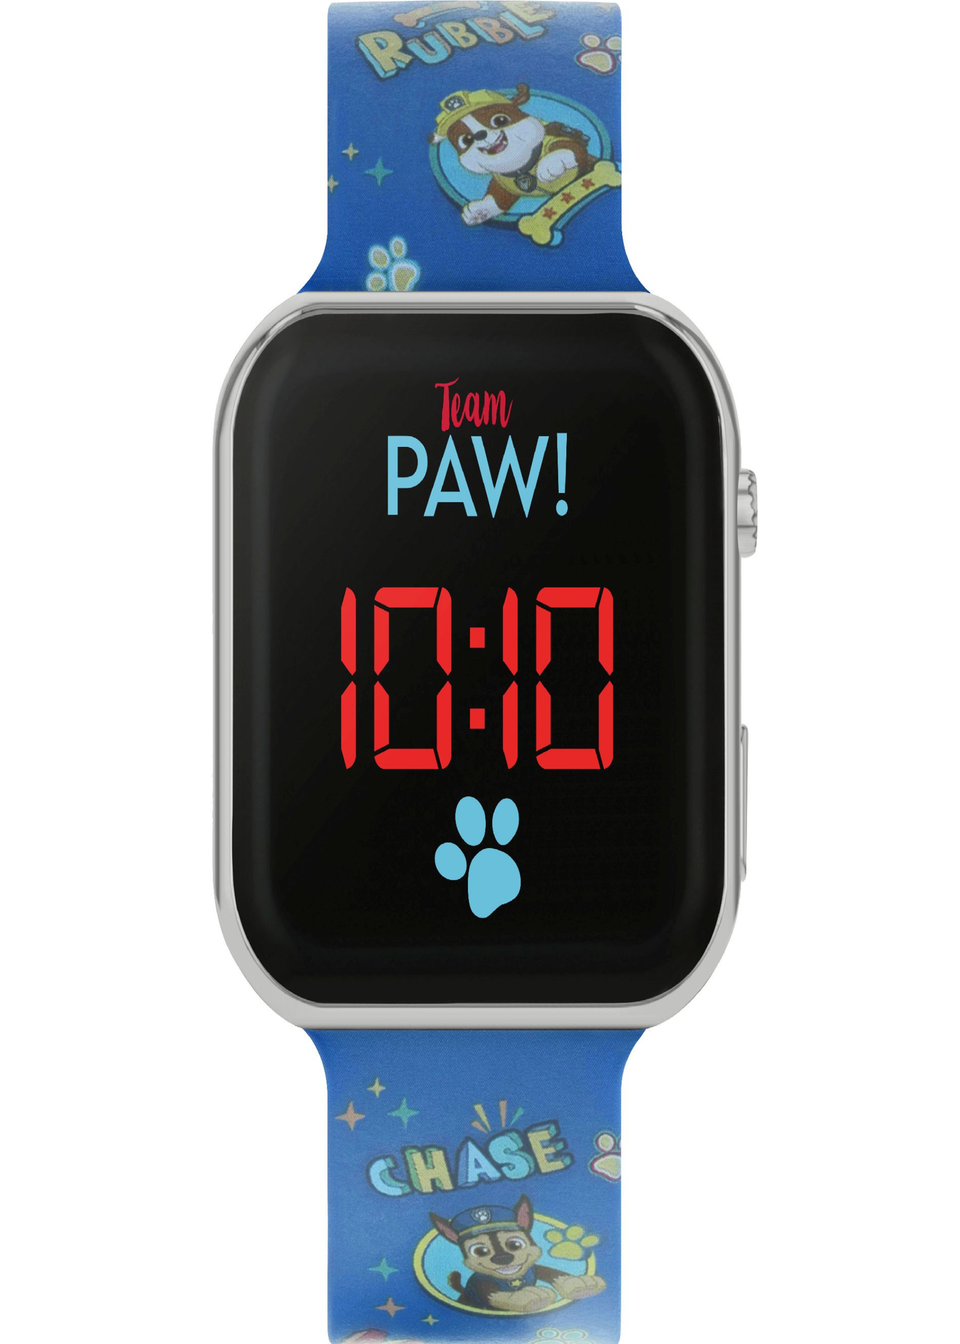 Blue Paw Patrol Printed Strap LED Watch